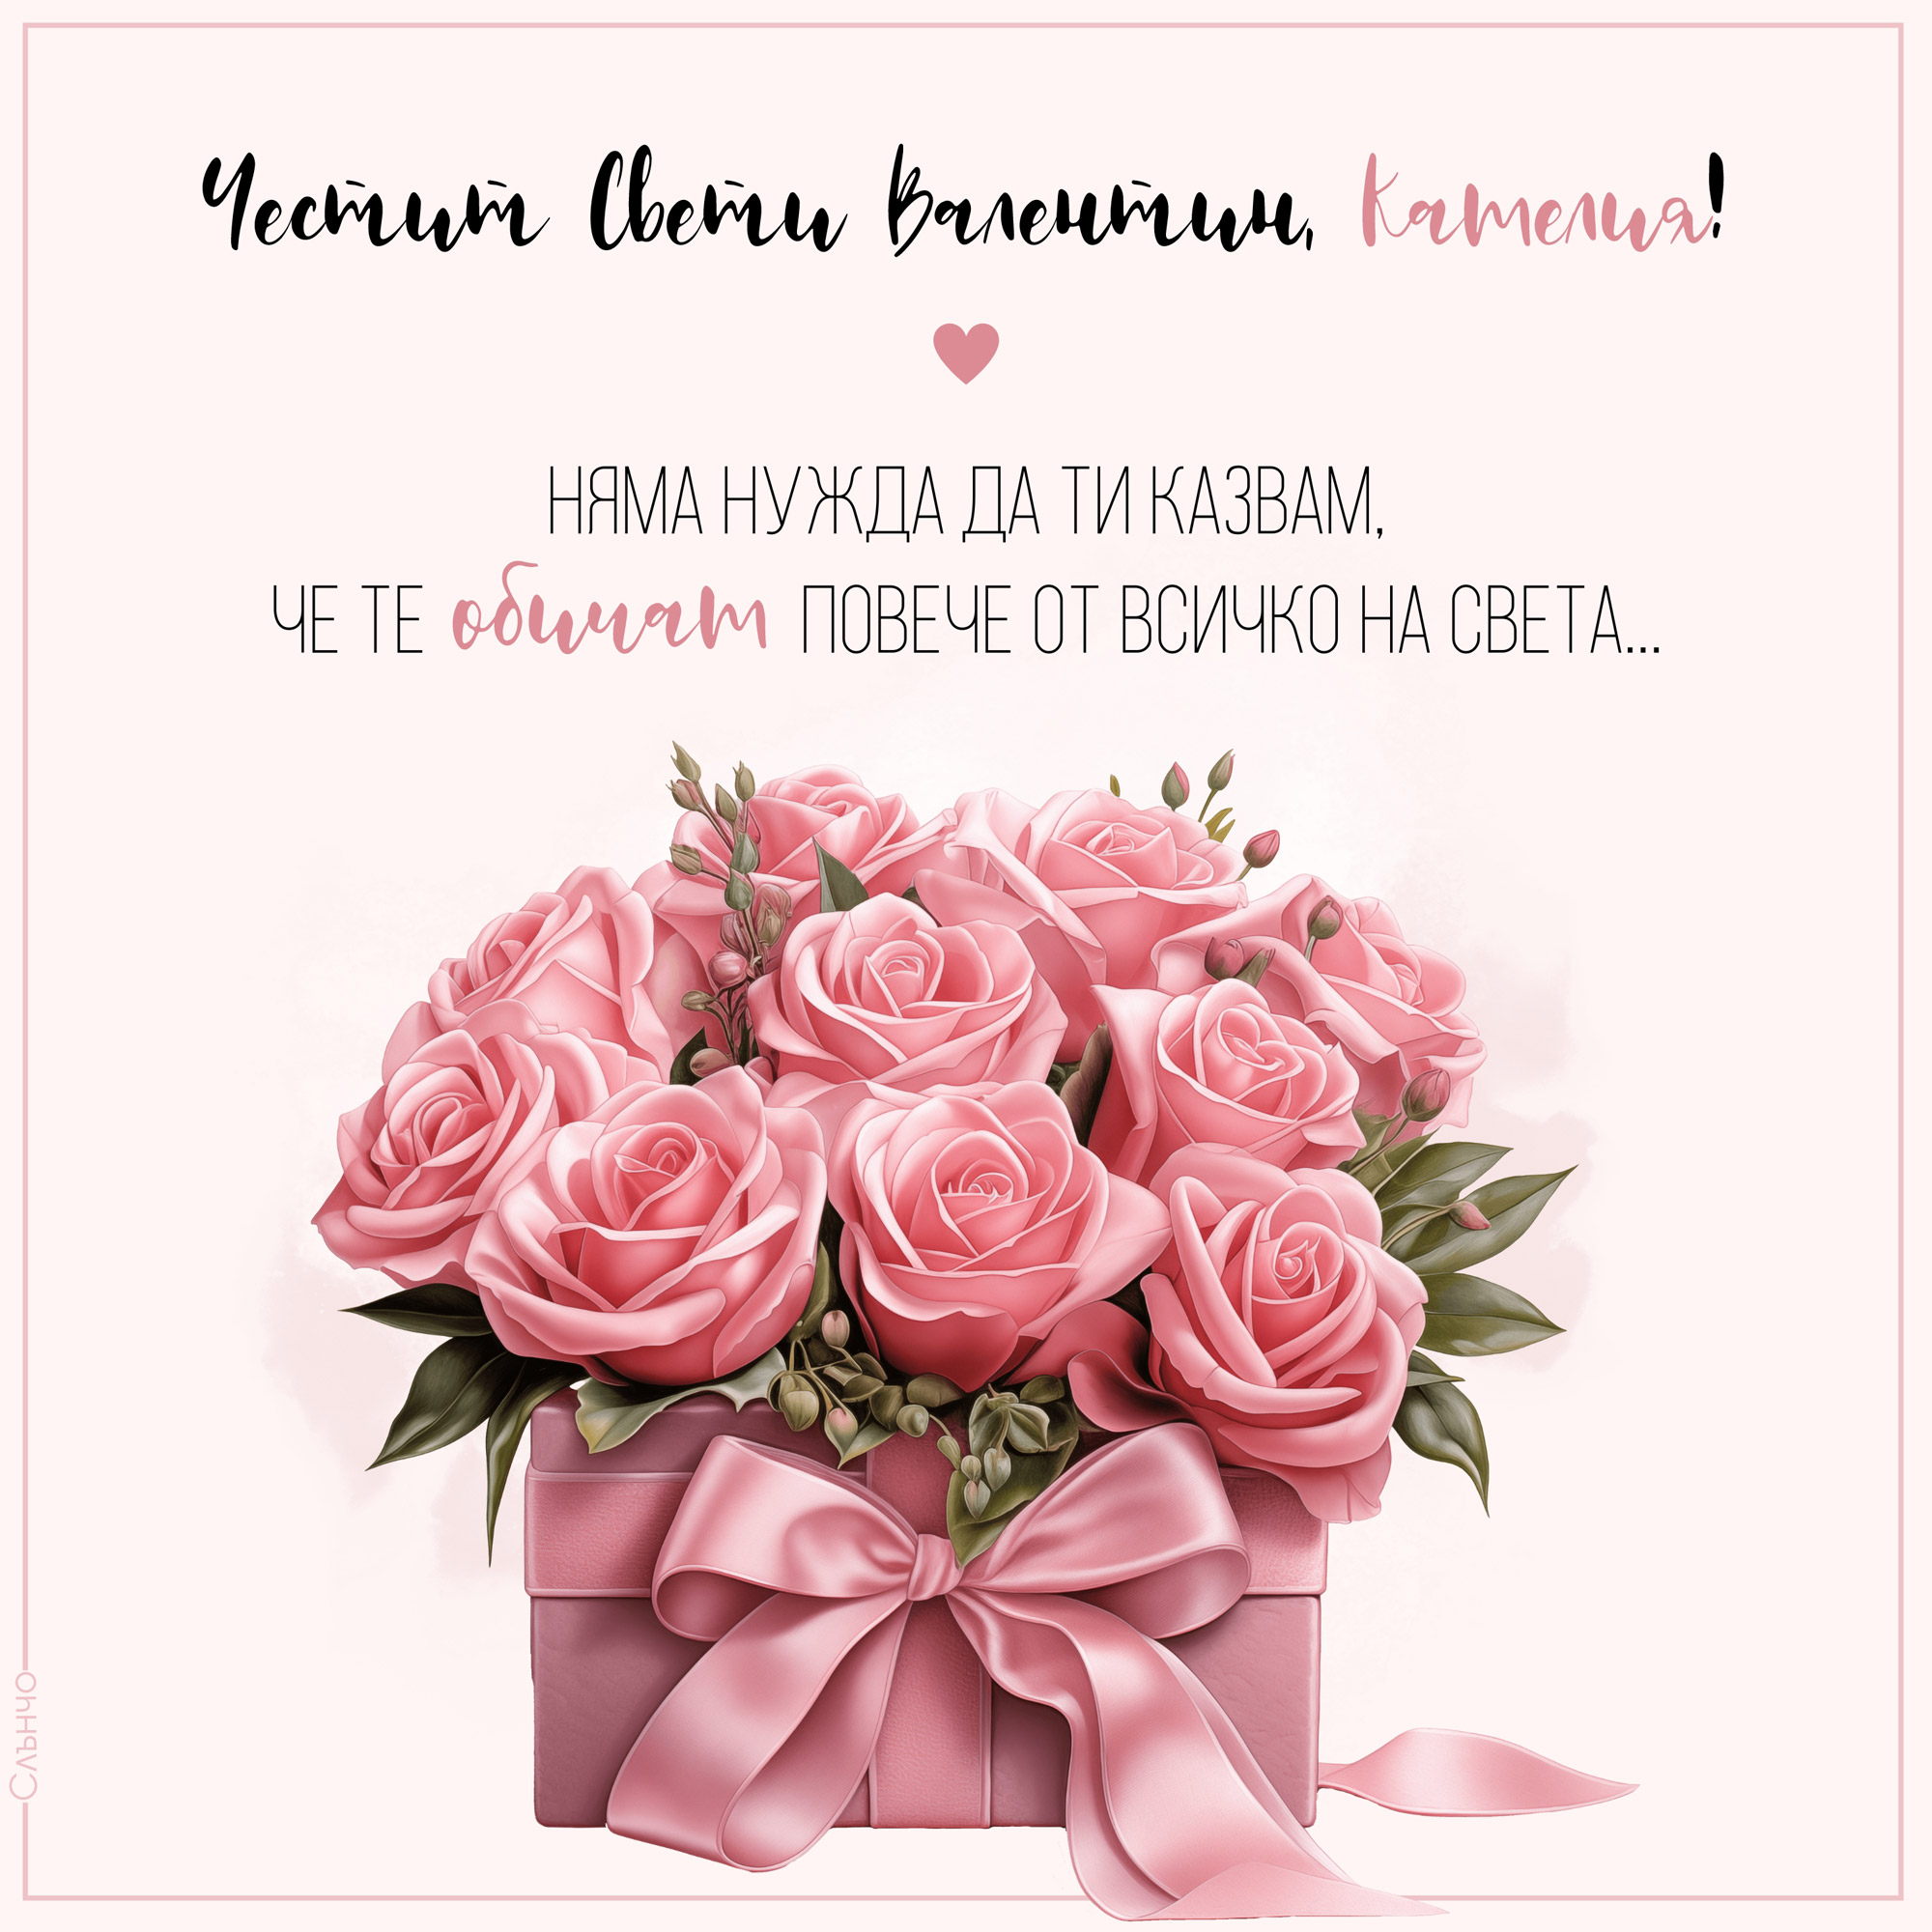 Честит Свети Валентин с розови цветя – Картички за Свети Валентин